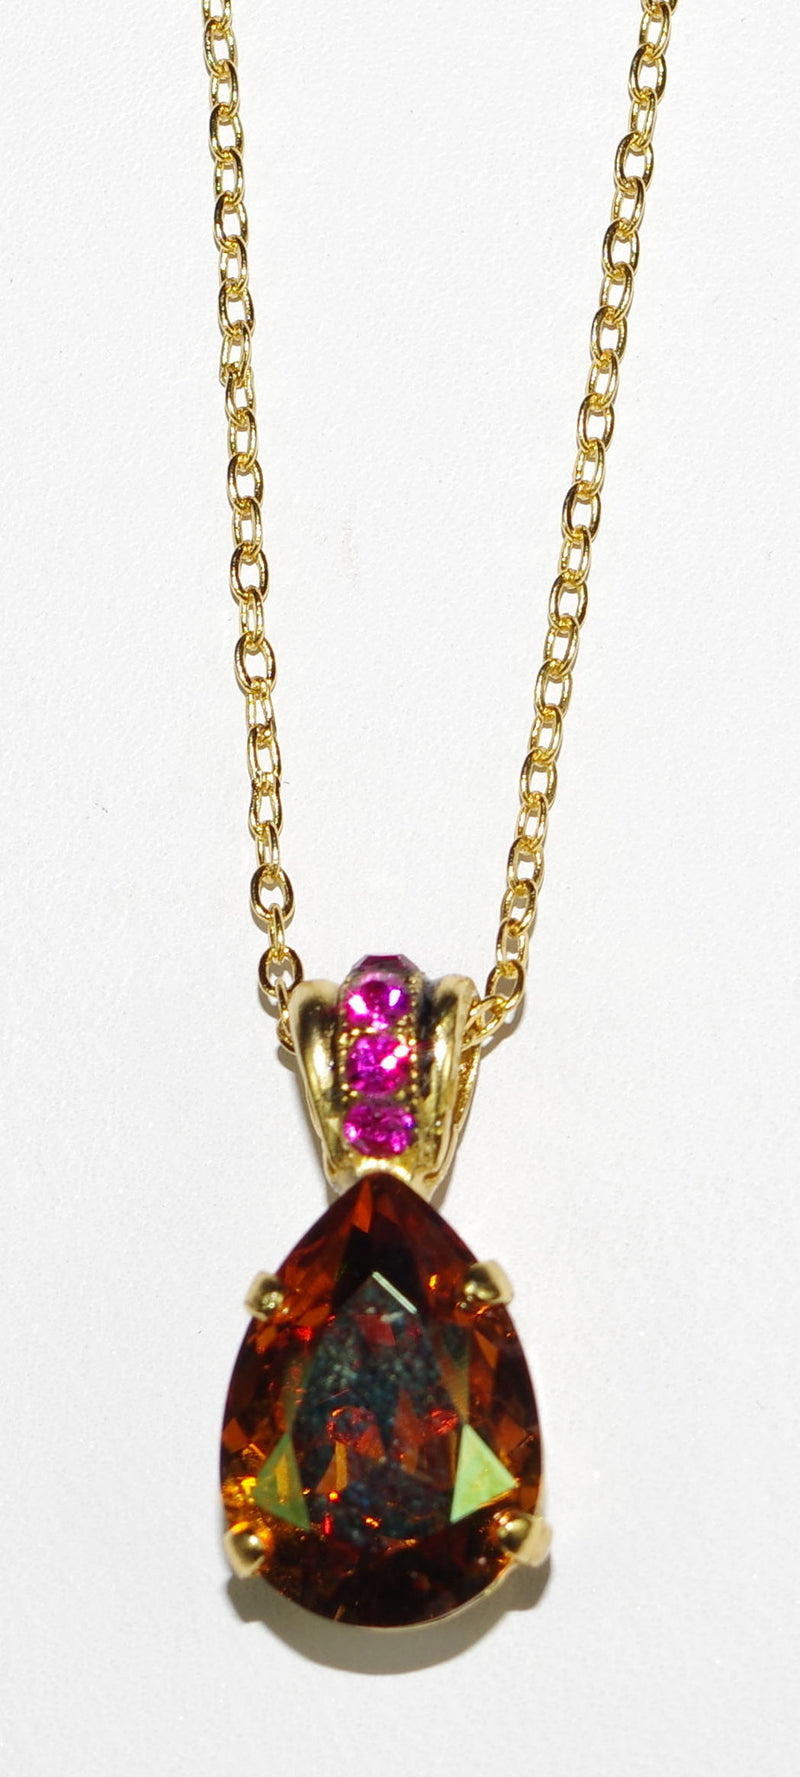 MARIANA PENDANT DAPHNE: fucshia, topaz stone in yellow gold setting, 18" adjustable chain